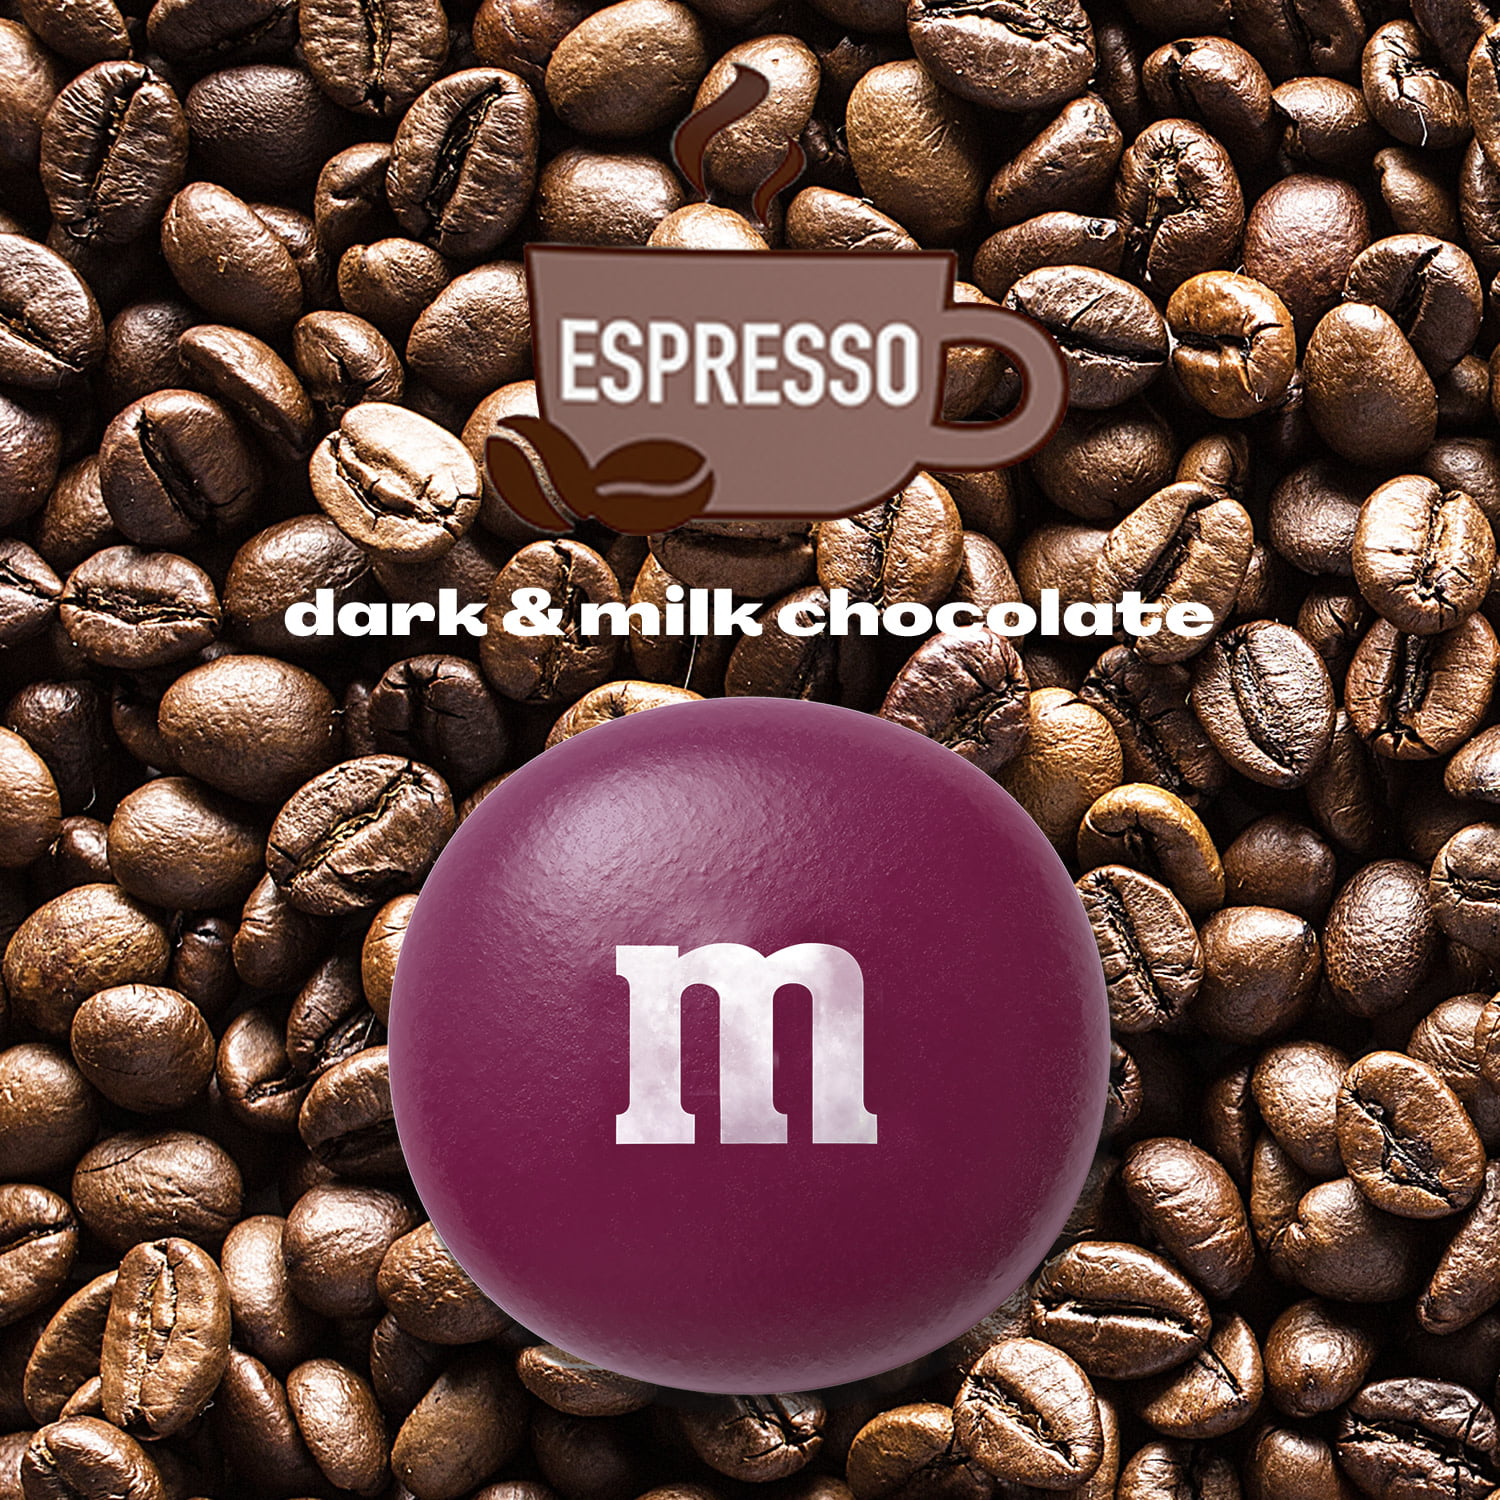 REVIEW: Espresso M&M's - The Impulsive Buy